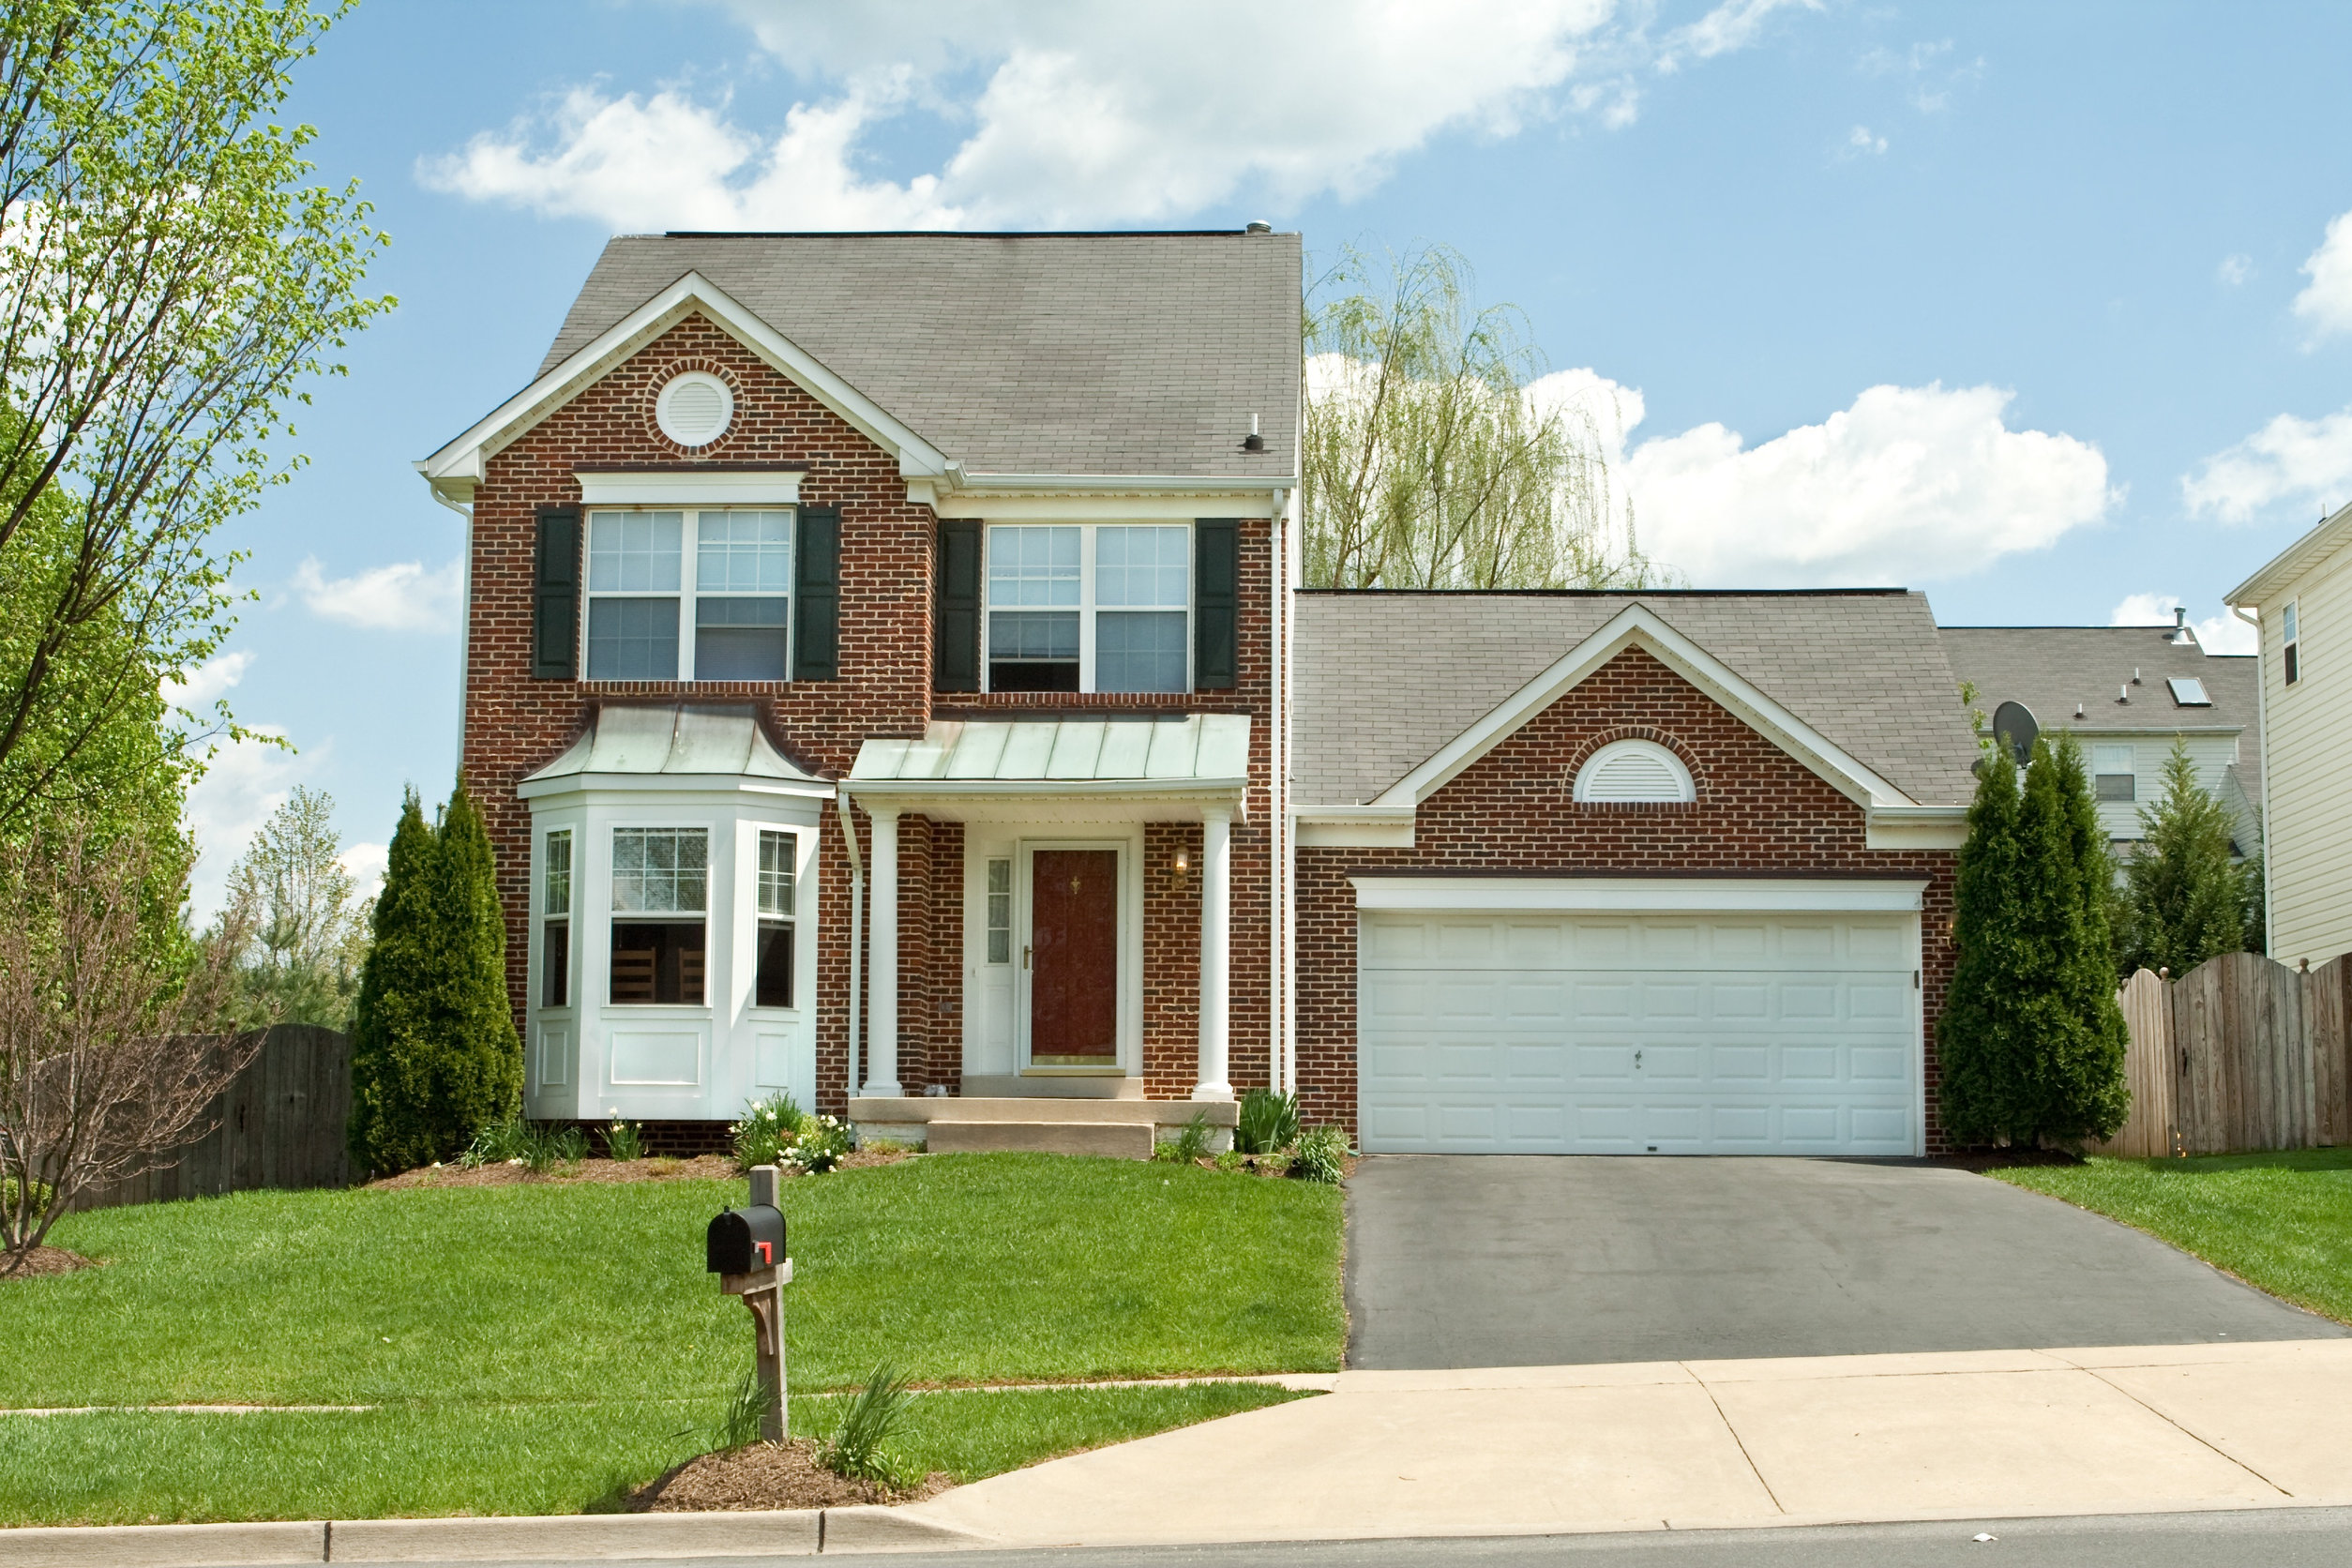 Single family home in suburban Maryland, USA.